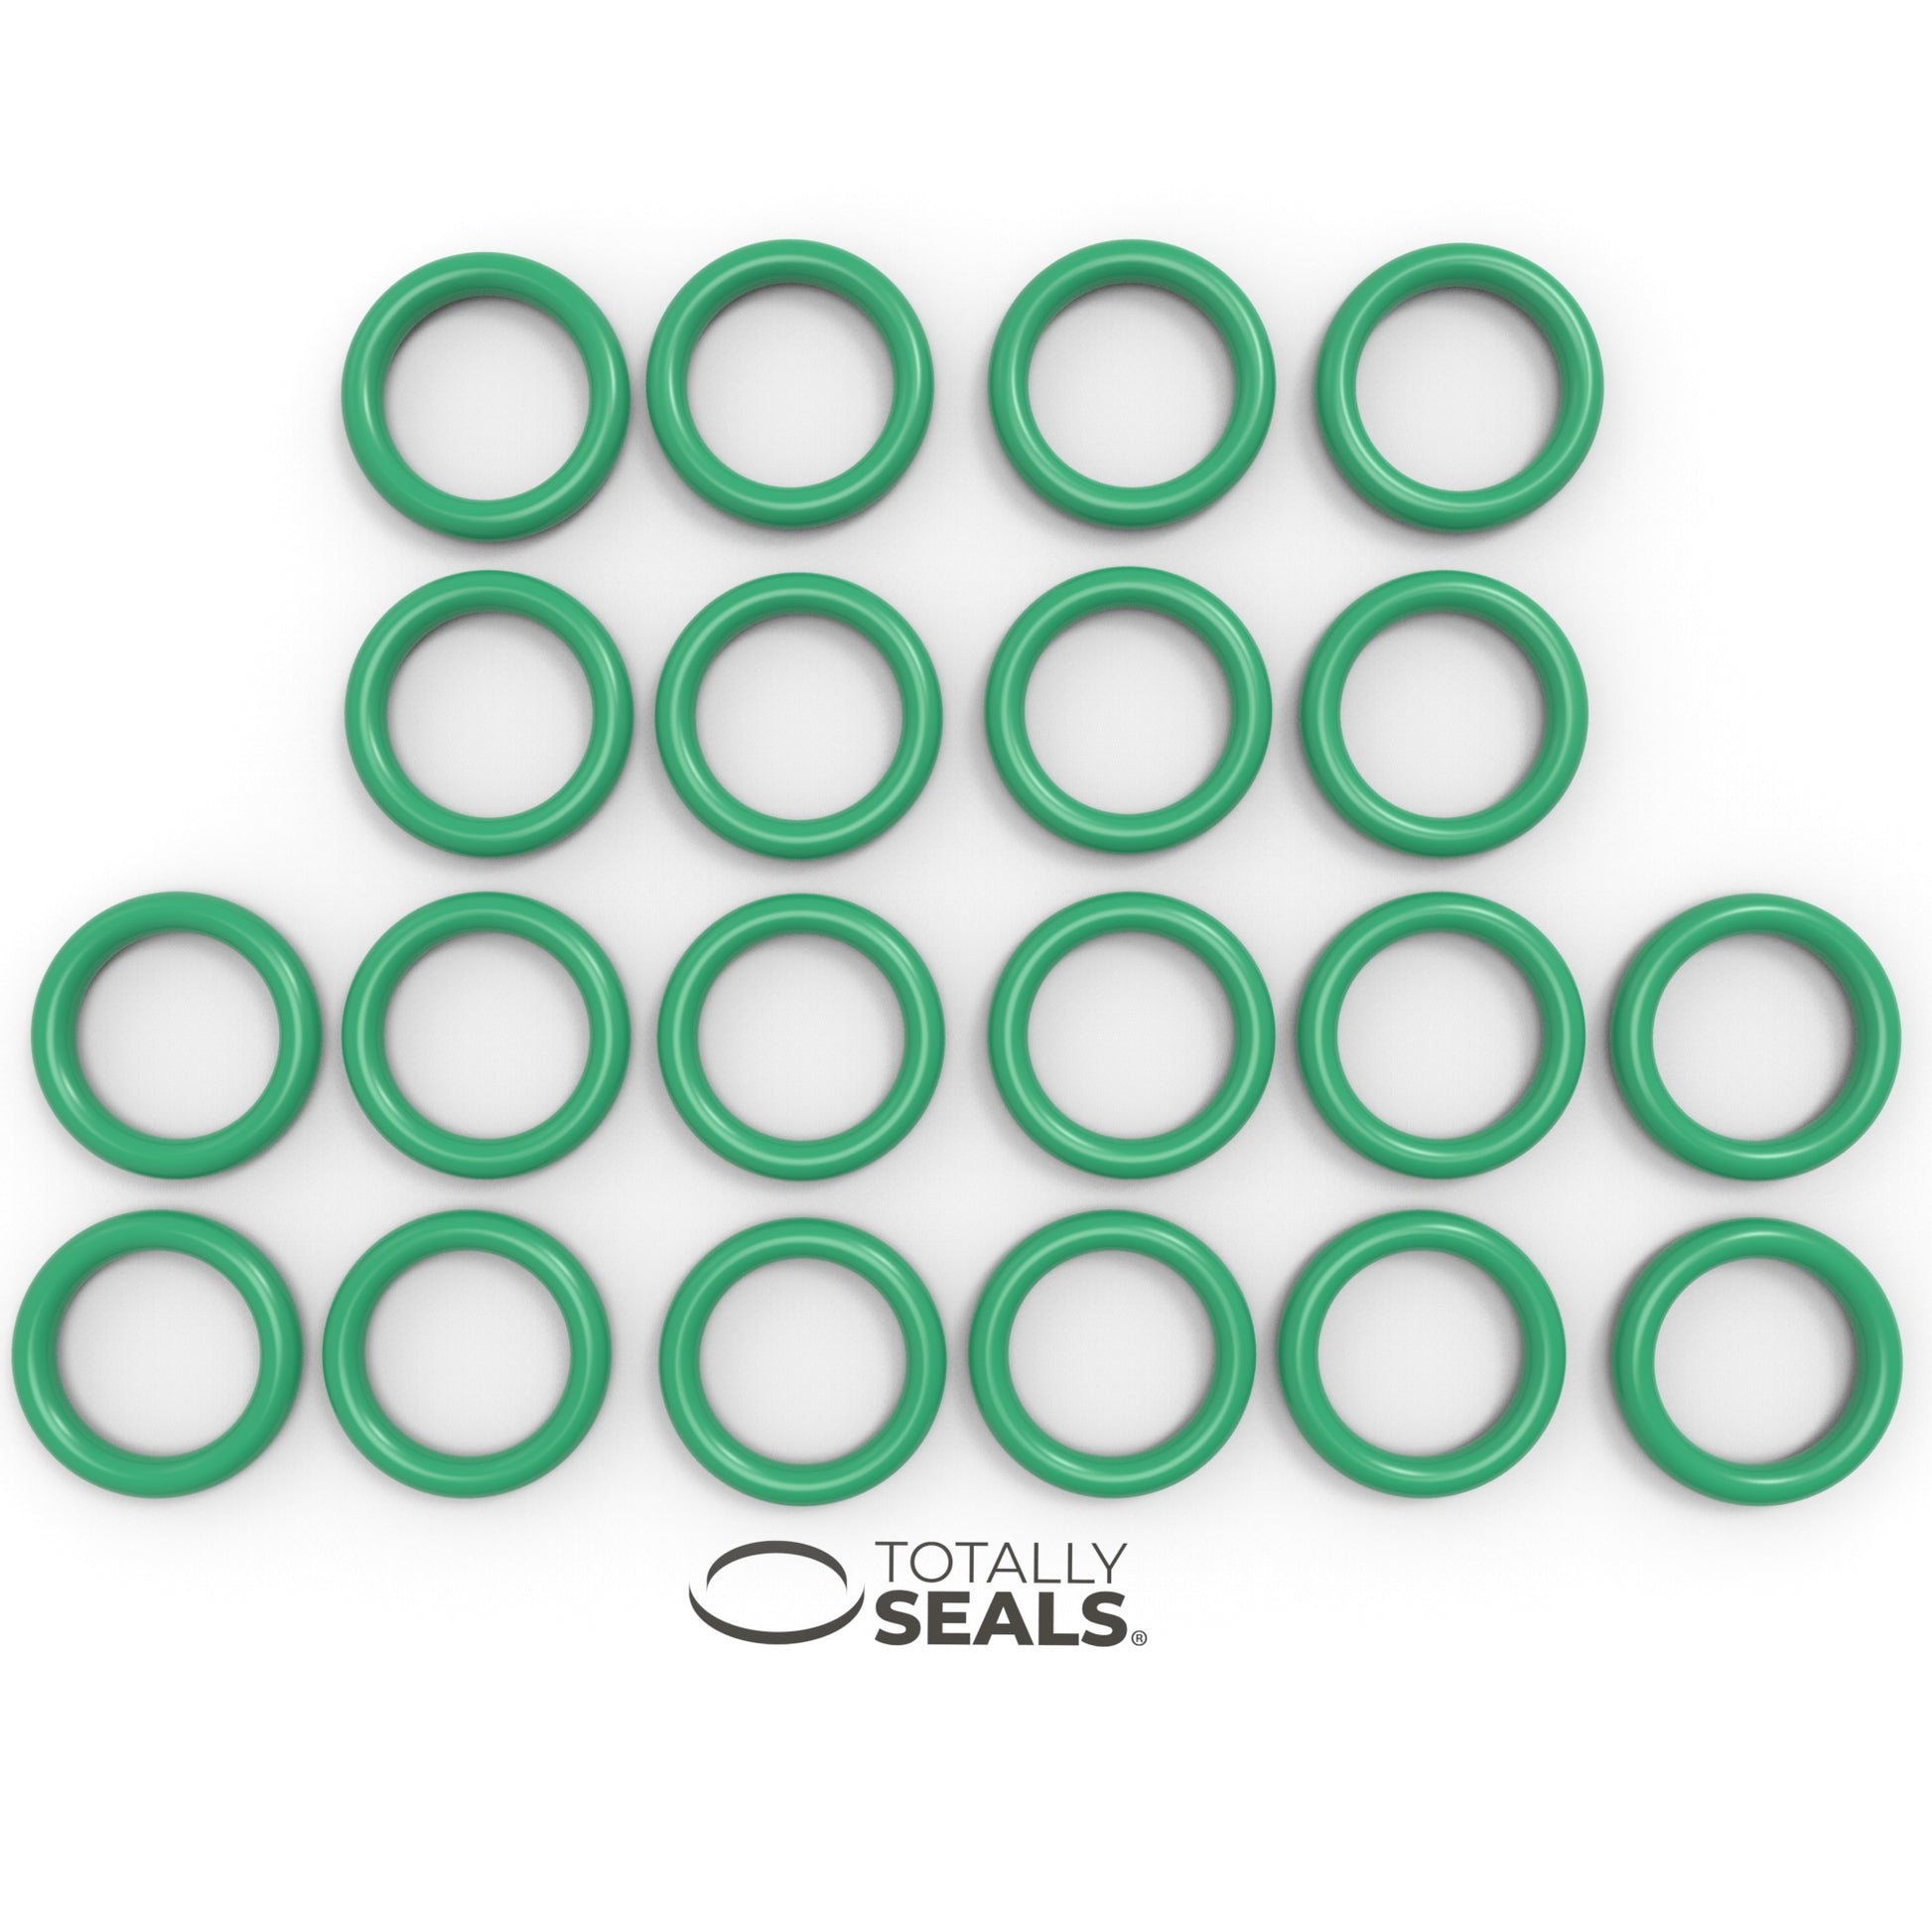 9mm x 2.5mm (14mm OD) FKM (Viton™) O-Rings - Totally Seals®